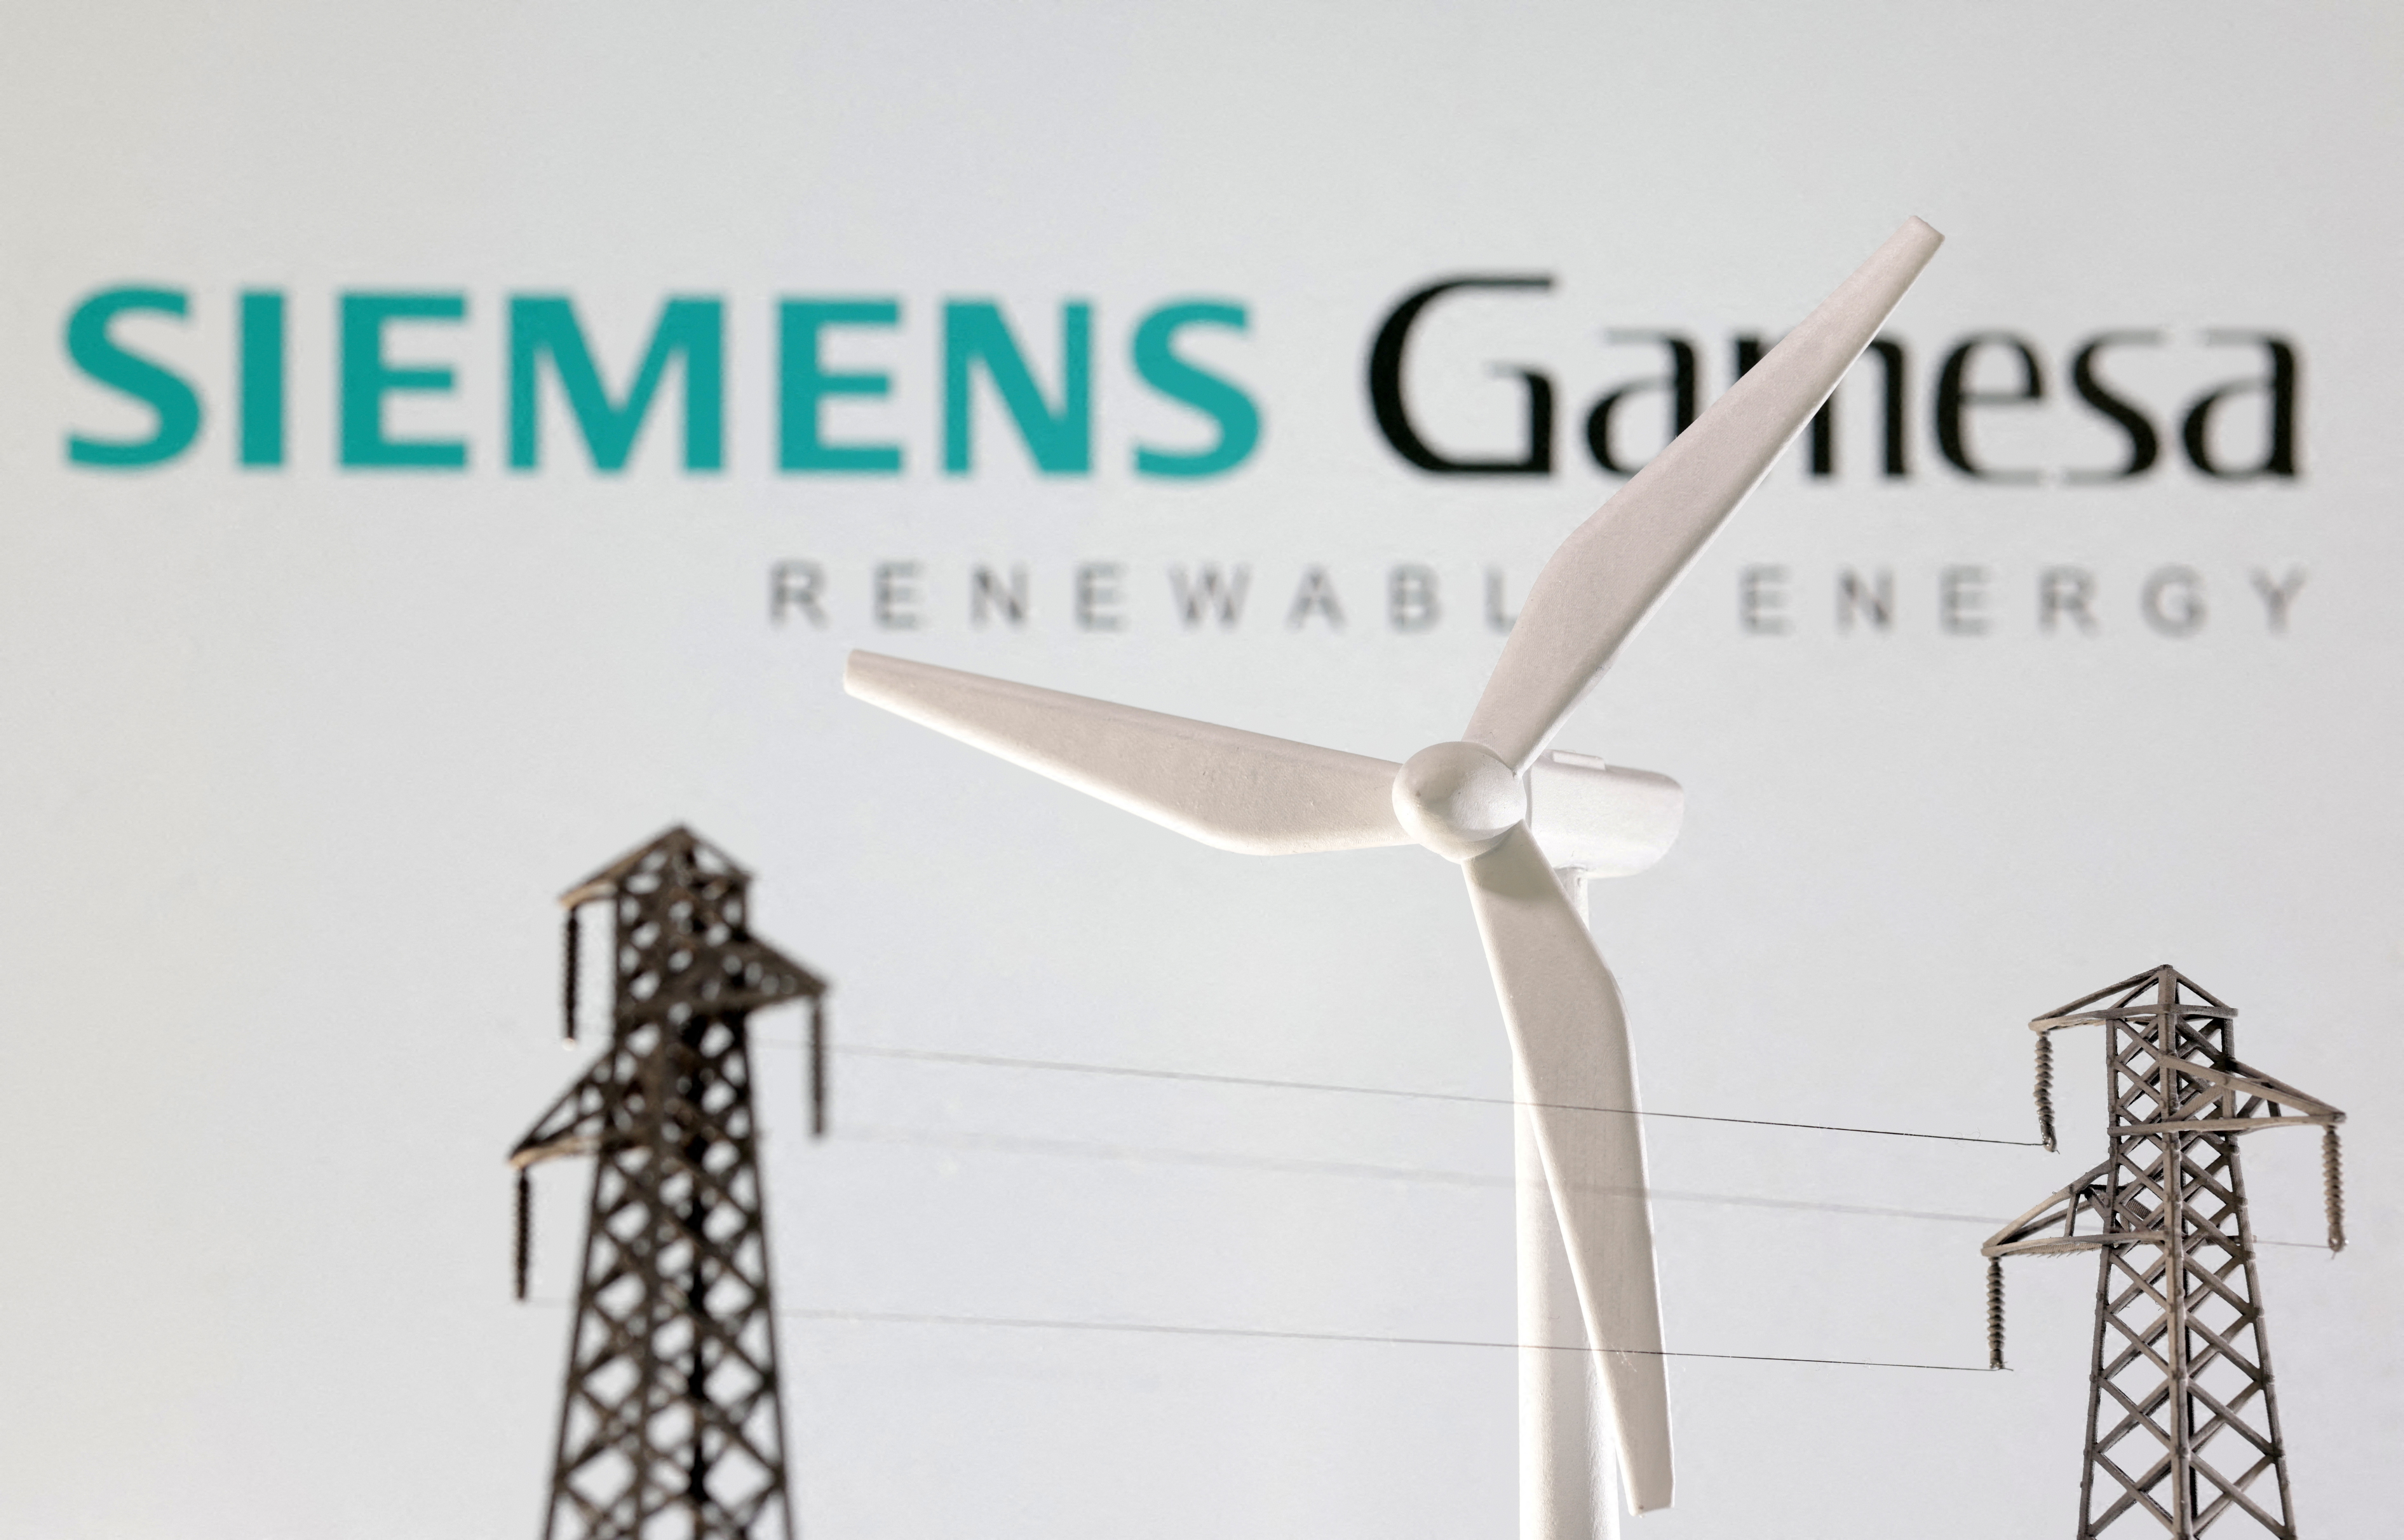 Illustration shows Siemens Gamesa logo